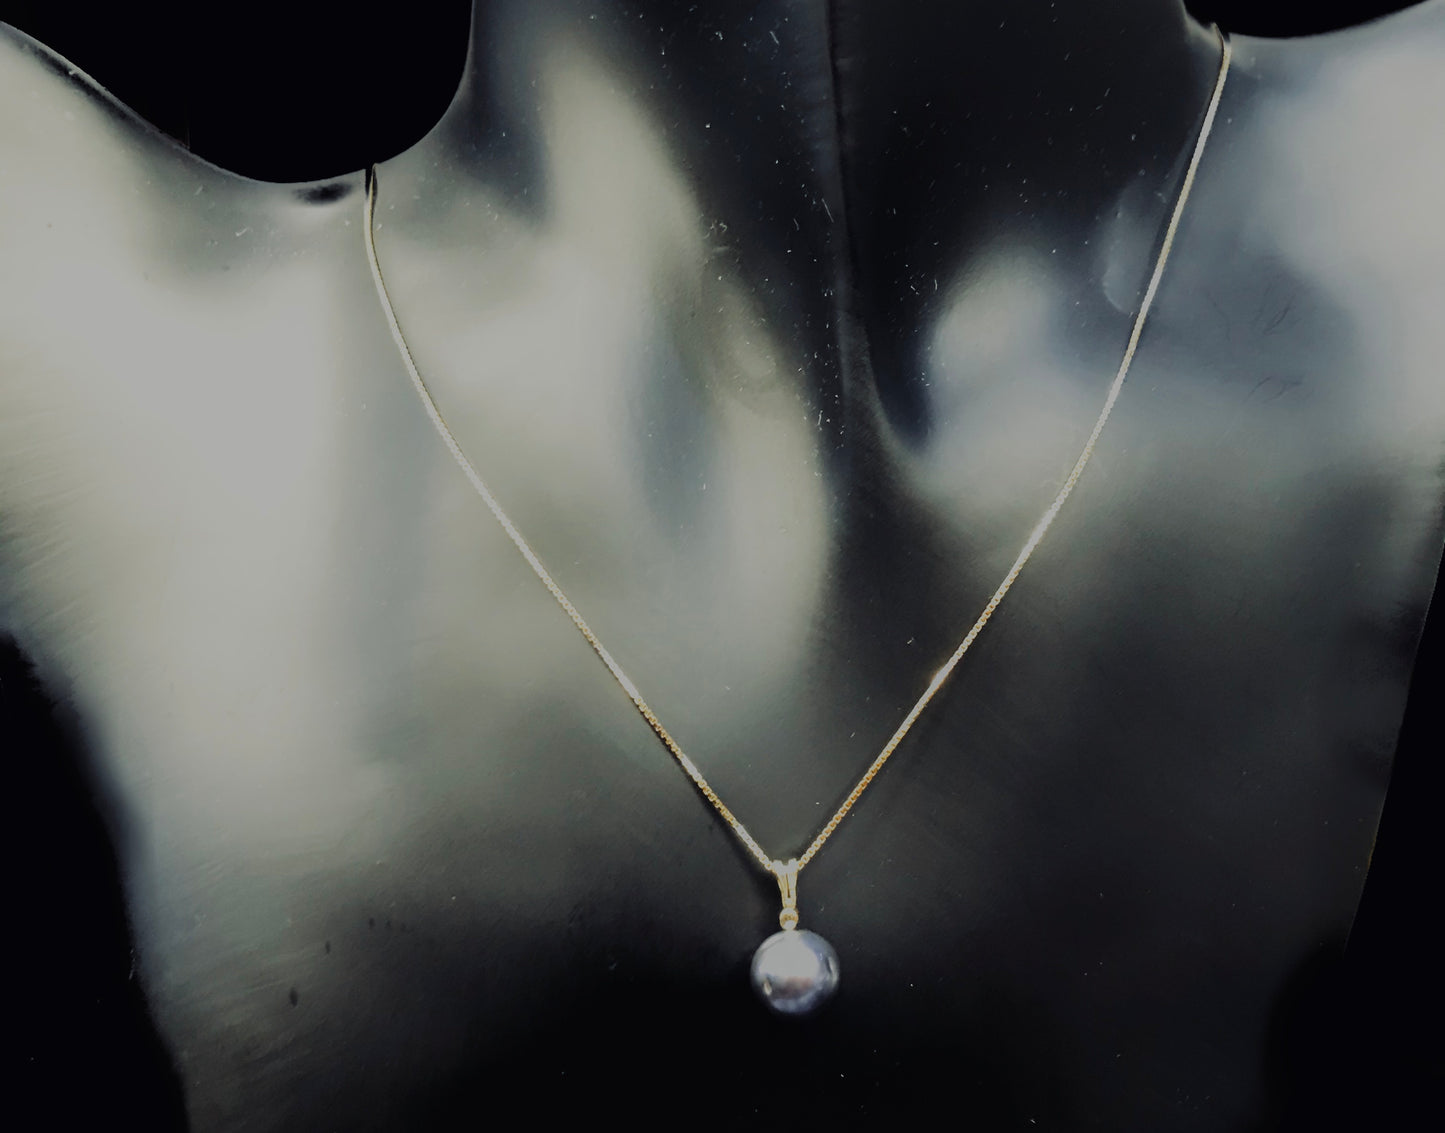 Pearl and diamond pendant